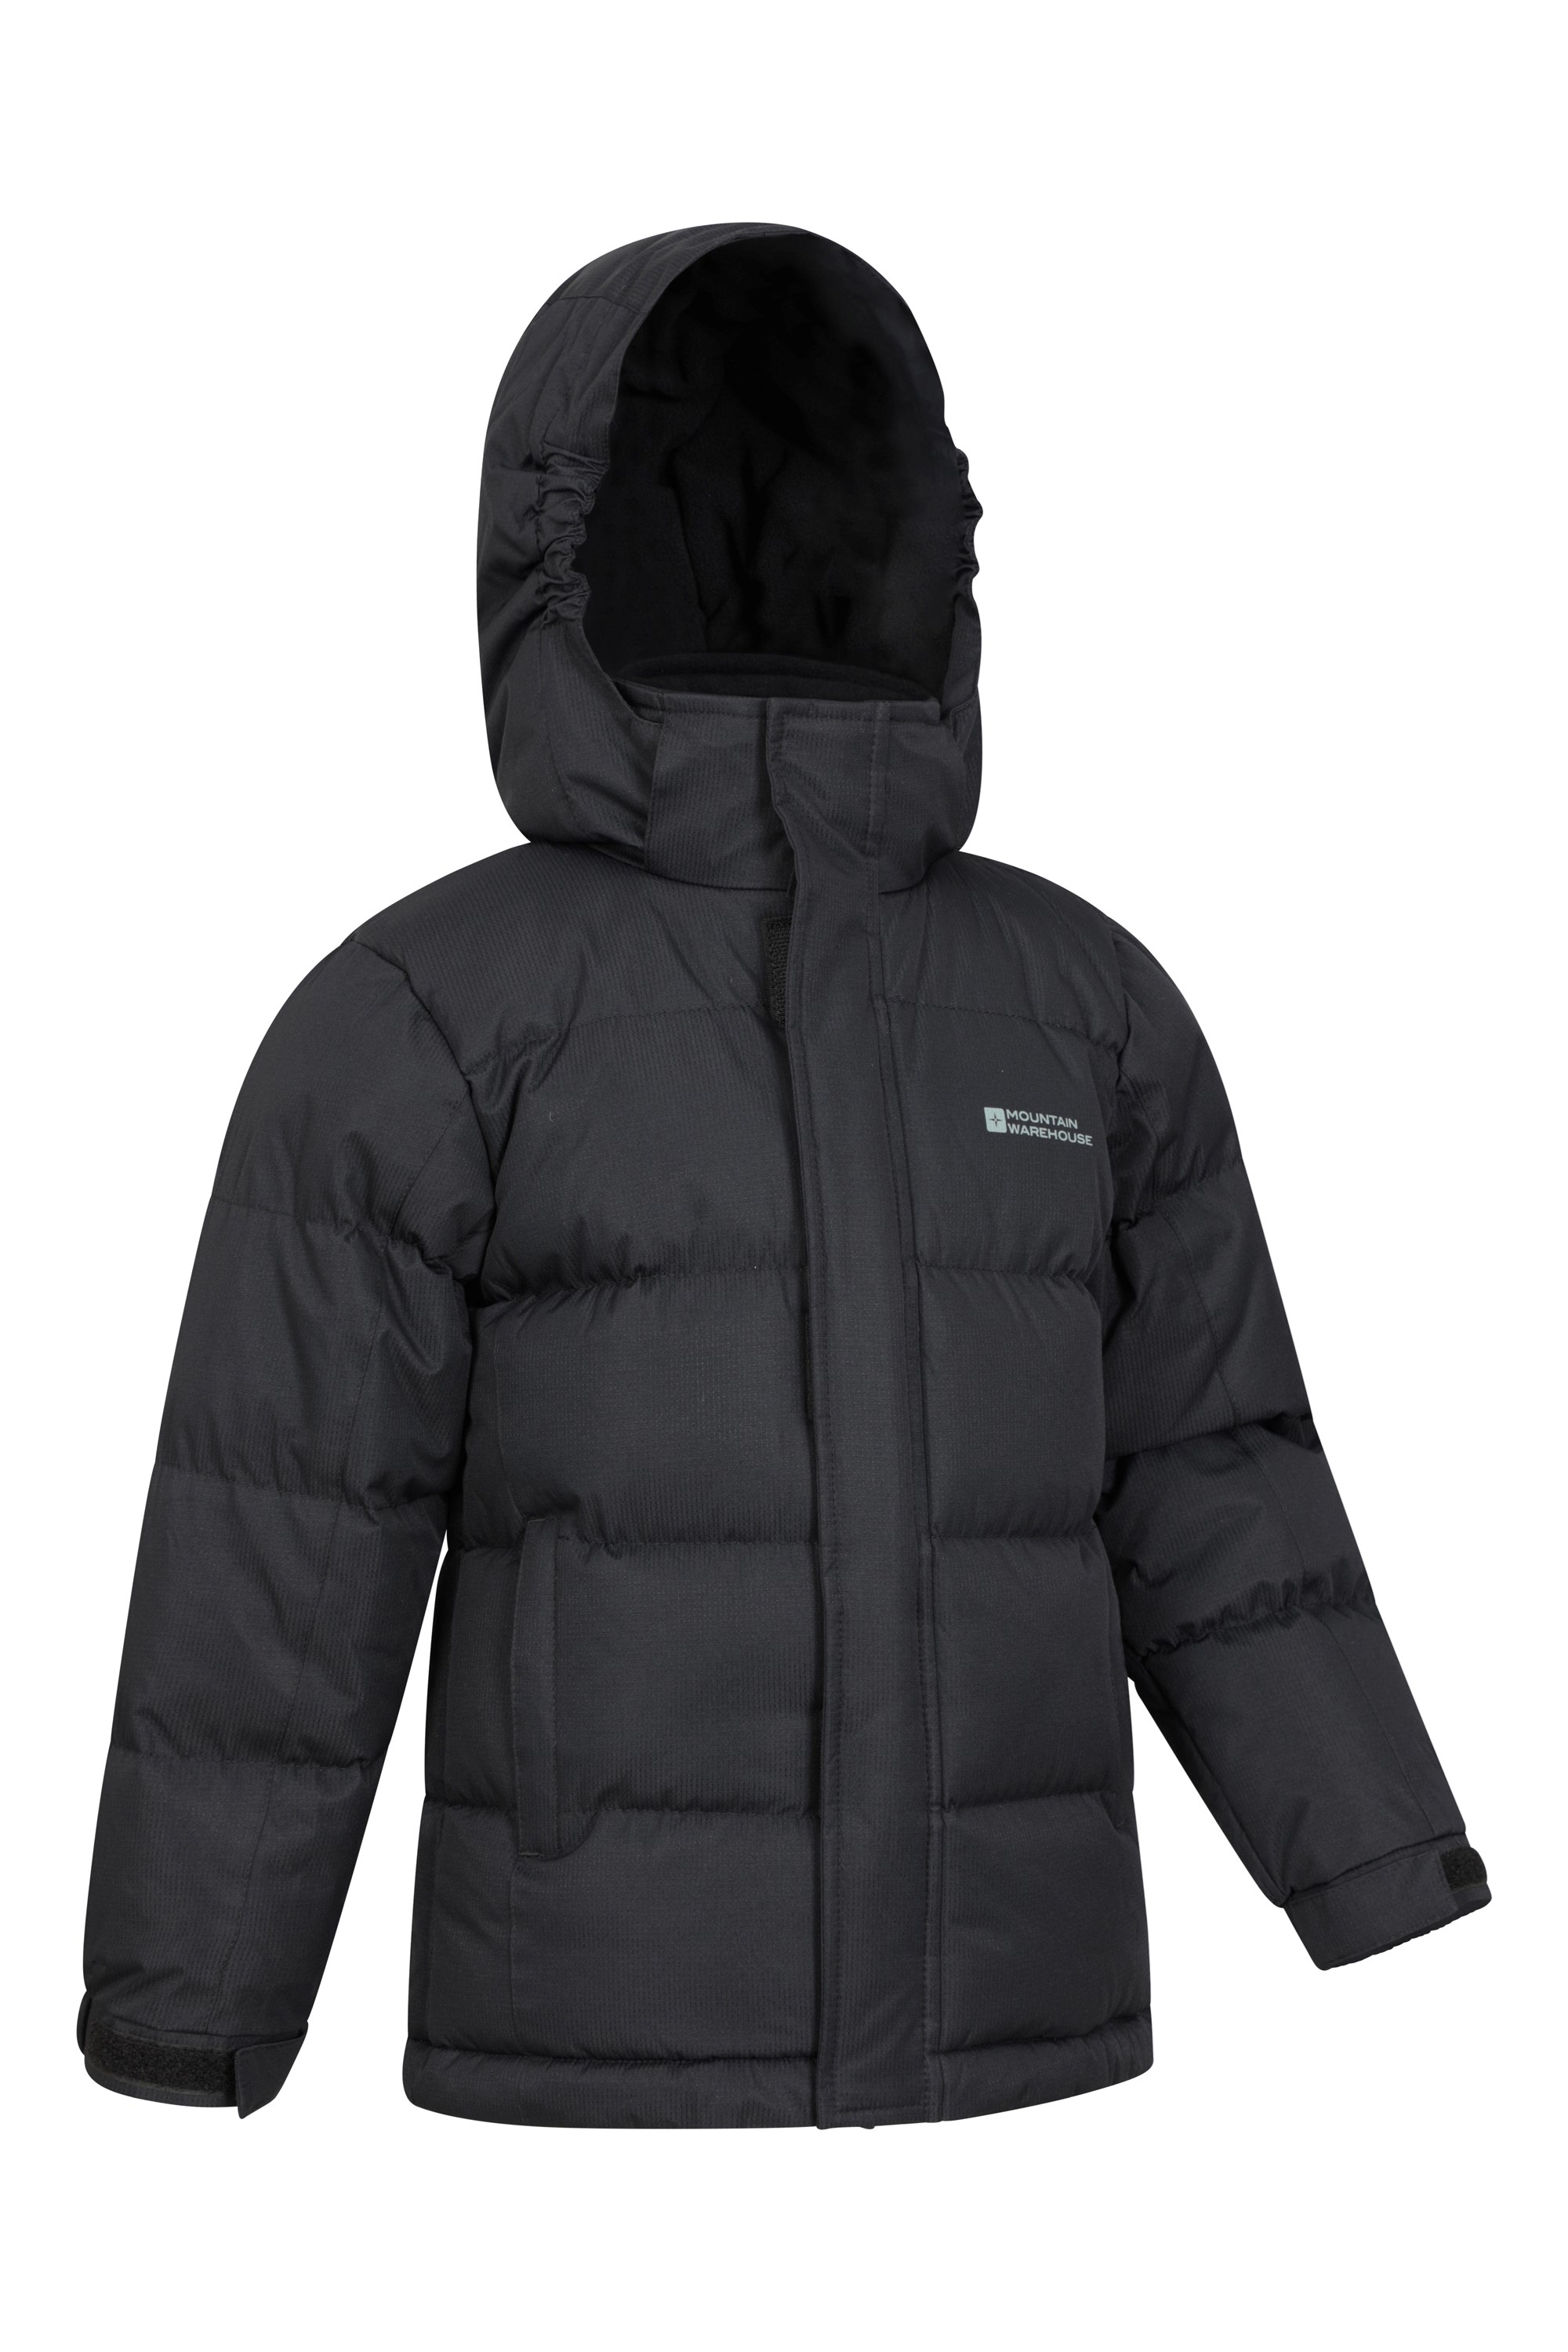 Mountain Warehouse Mountain Warehouse Boys Black Puffer Hooded Jacket Youth Size 9-10 Zip Pockets 